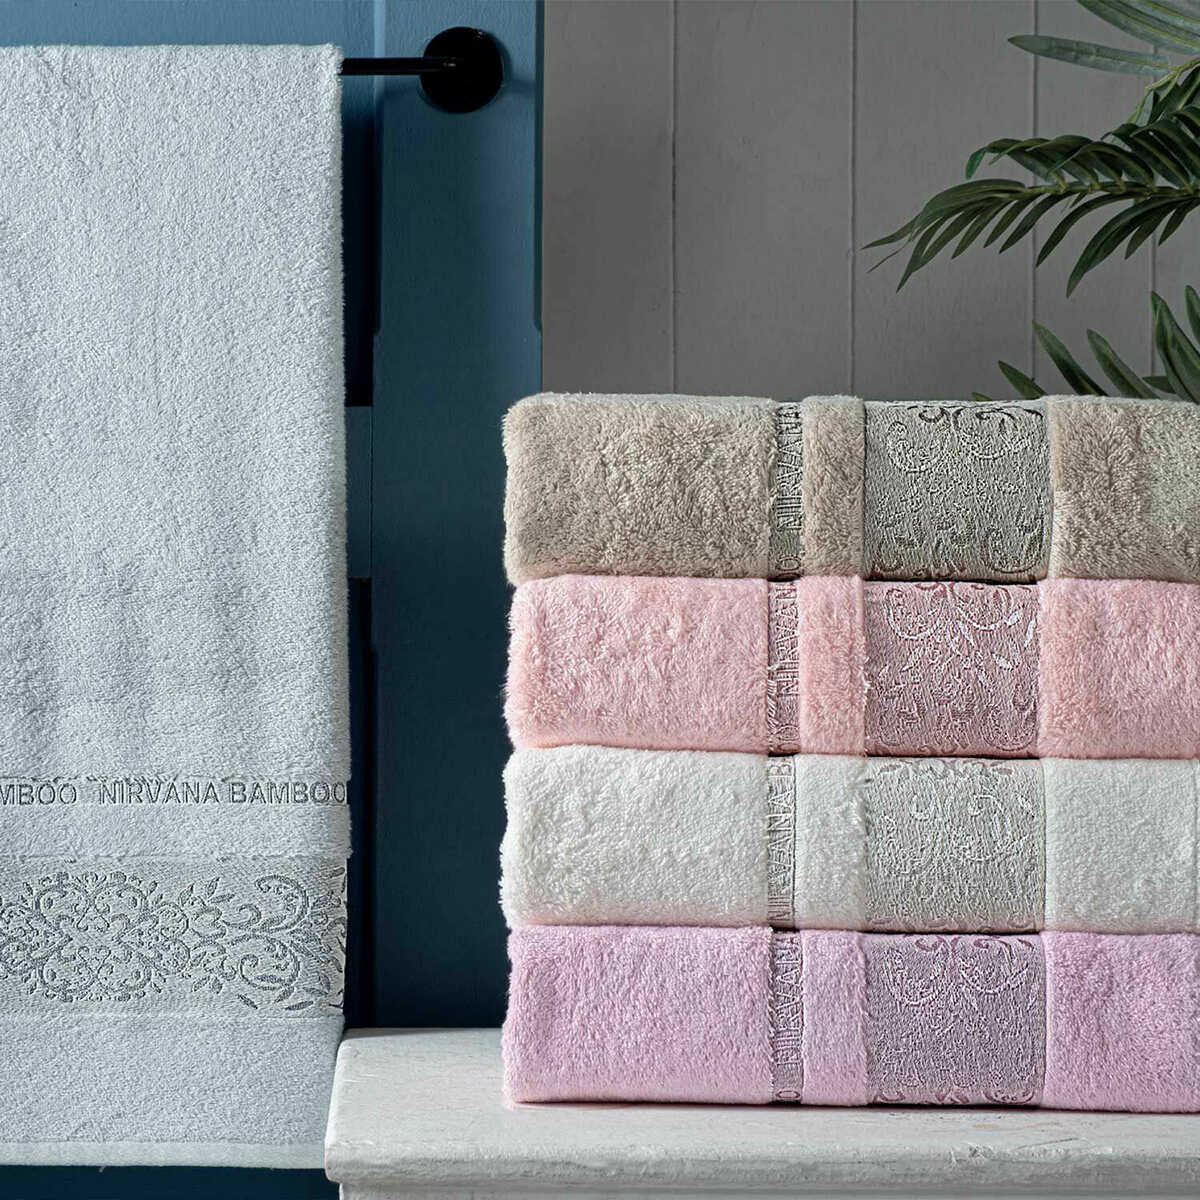 Maxstyle Nirvana Bamboo Lilac Towel 70X140 cm